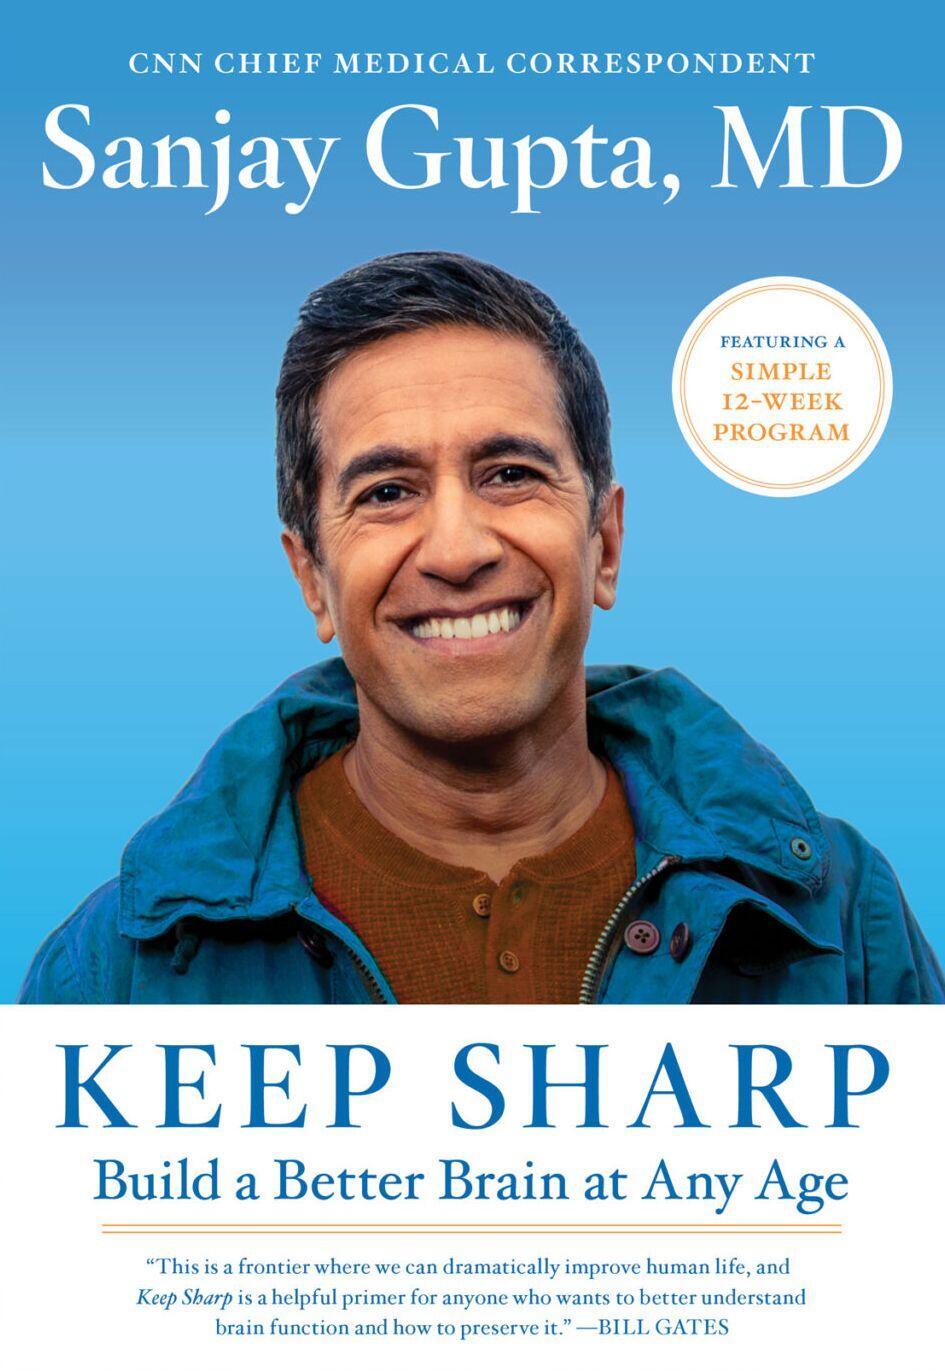 Dr. Sanjay Gupta’s “Keep Sharp” is the No. 10 bestselling book in Petaluma this week.